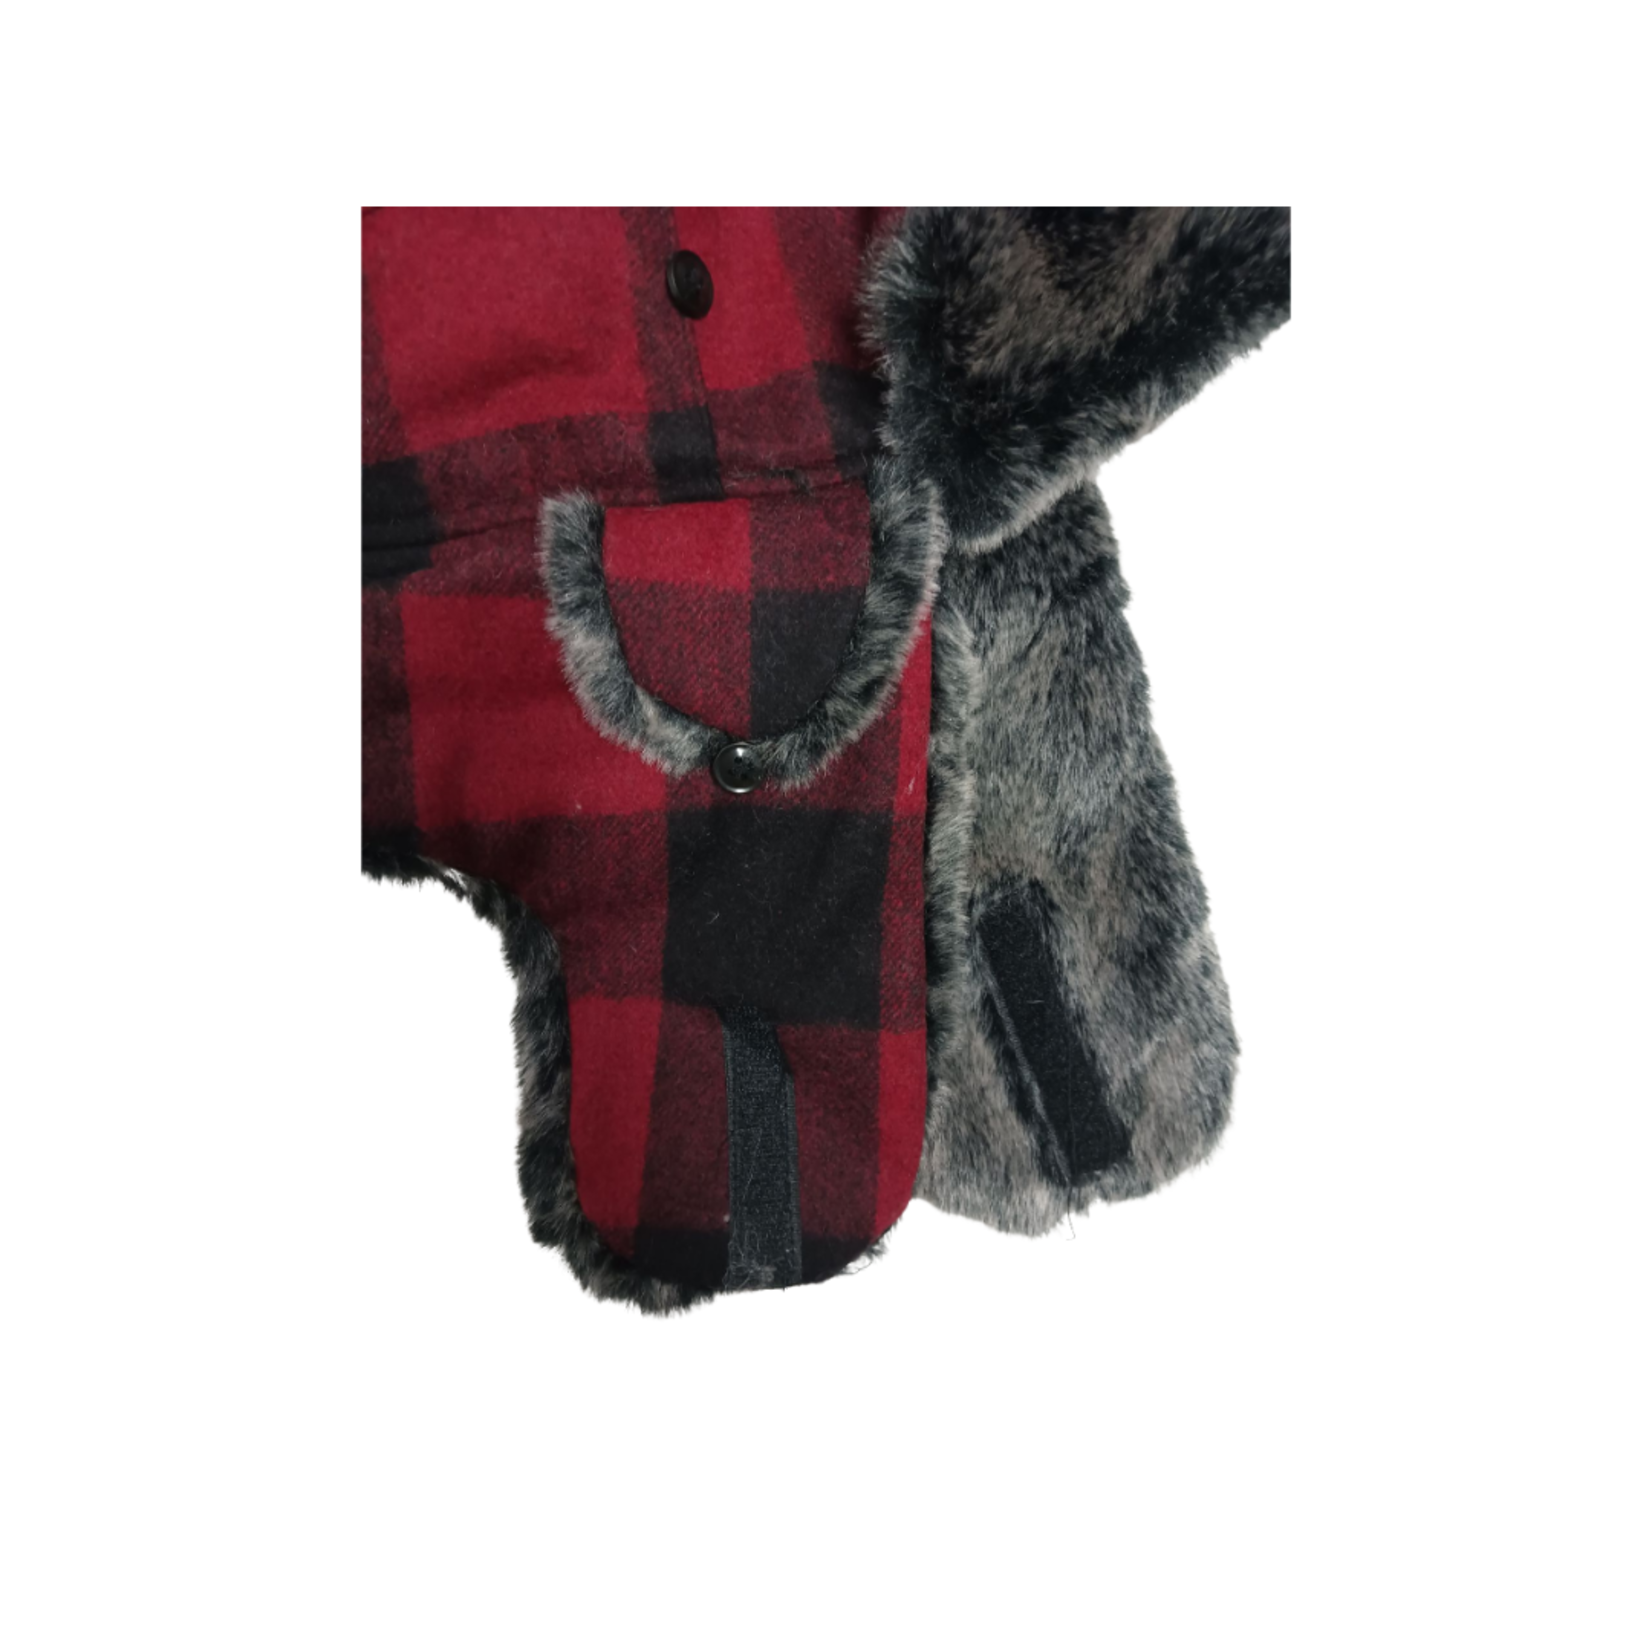 Weatherproof Faux Fur Plaid Red/Black Trapper Hat, Large